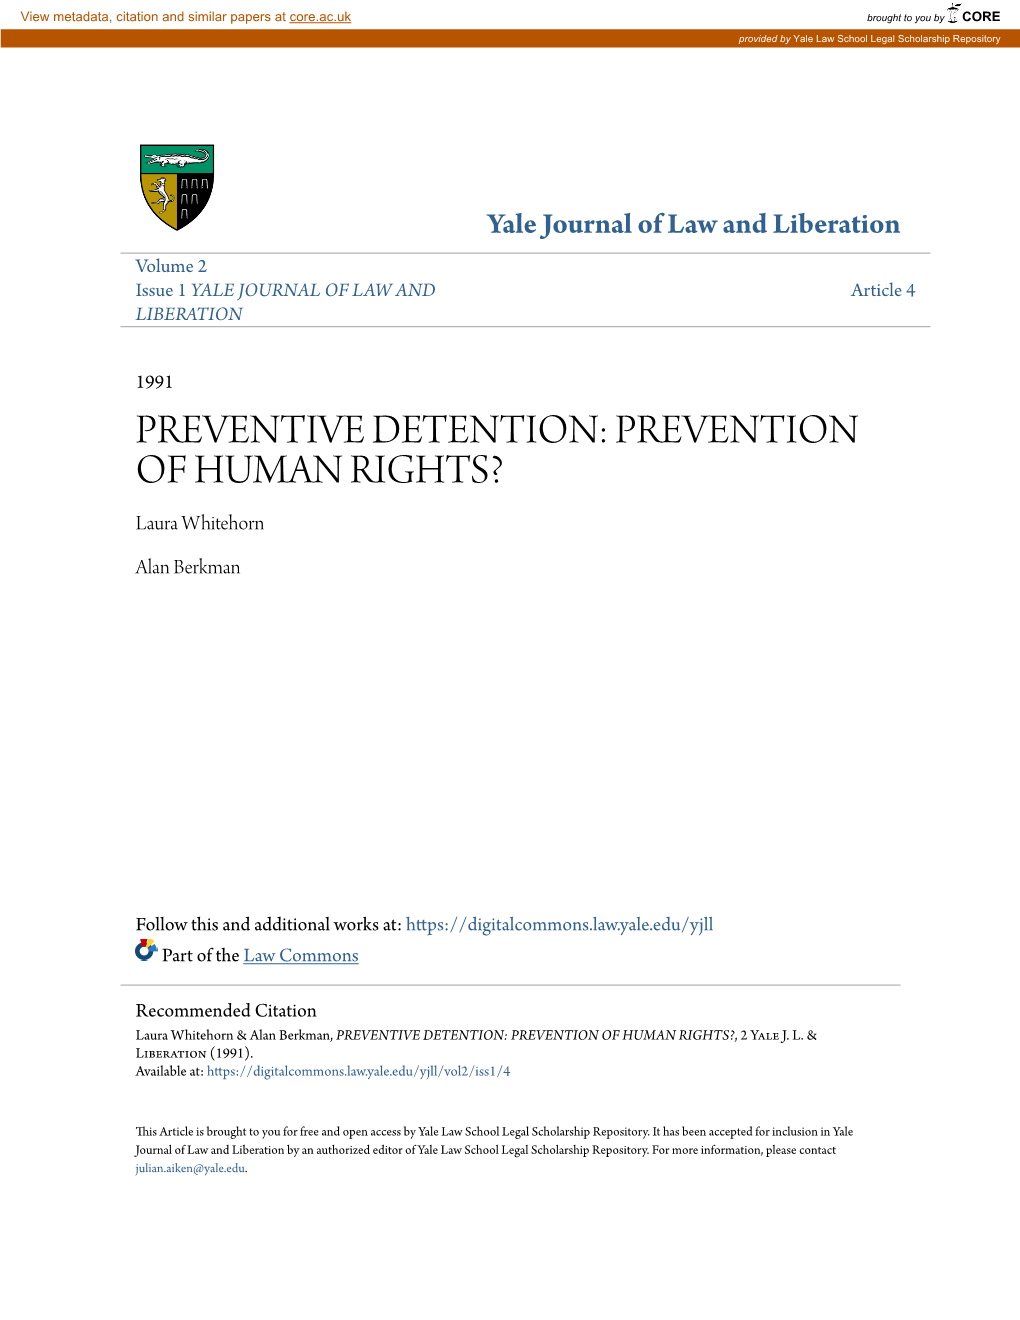 PREVENTIVE DETENTION: PREVENTION of HUMAN RIGHTS? Laura Whitehorn